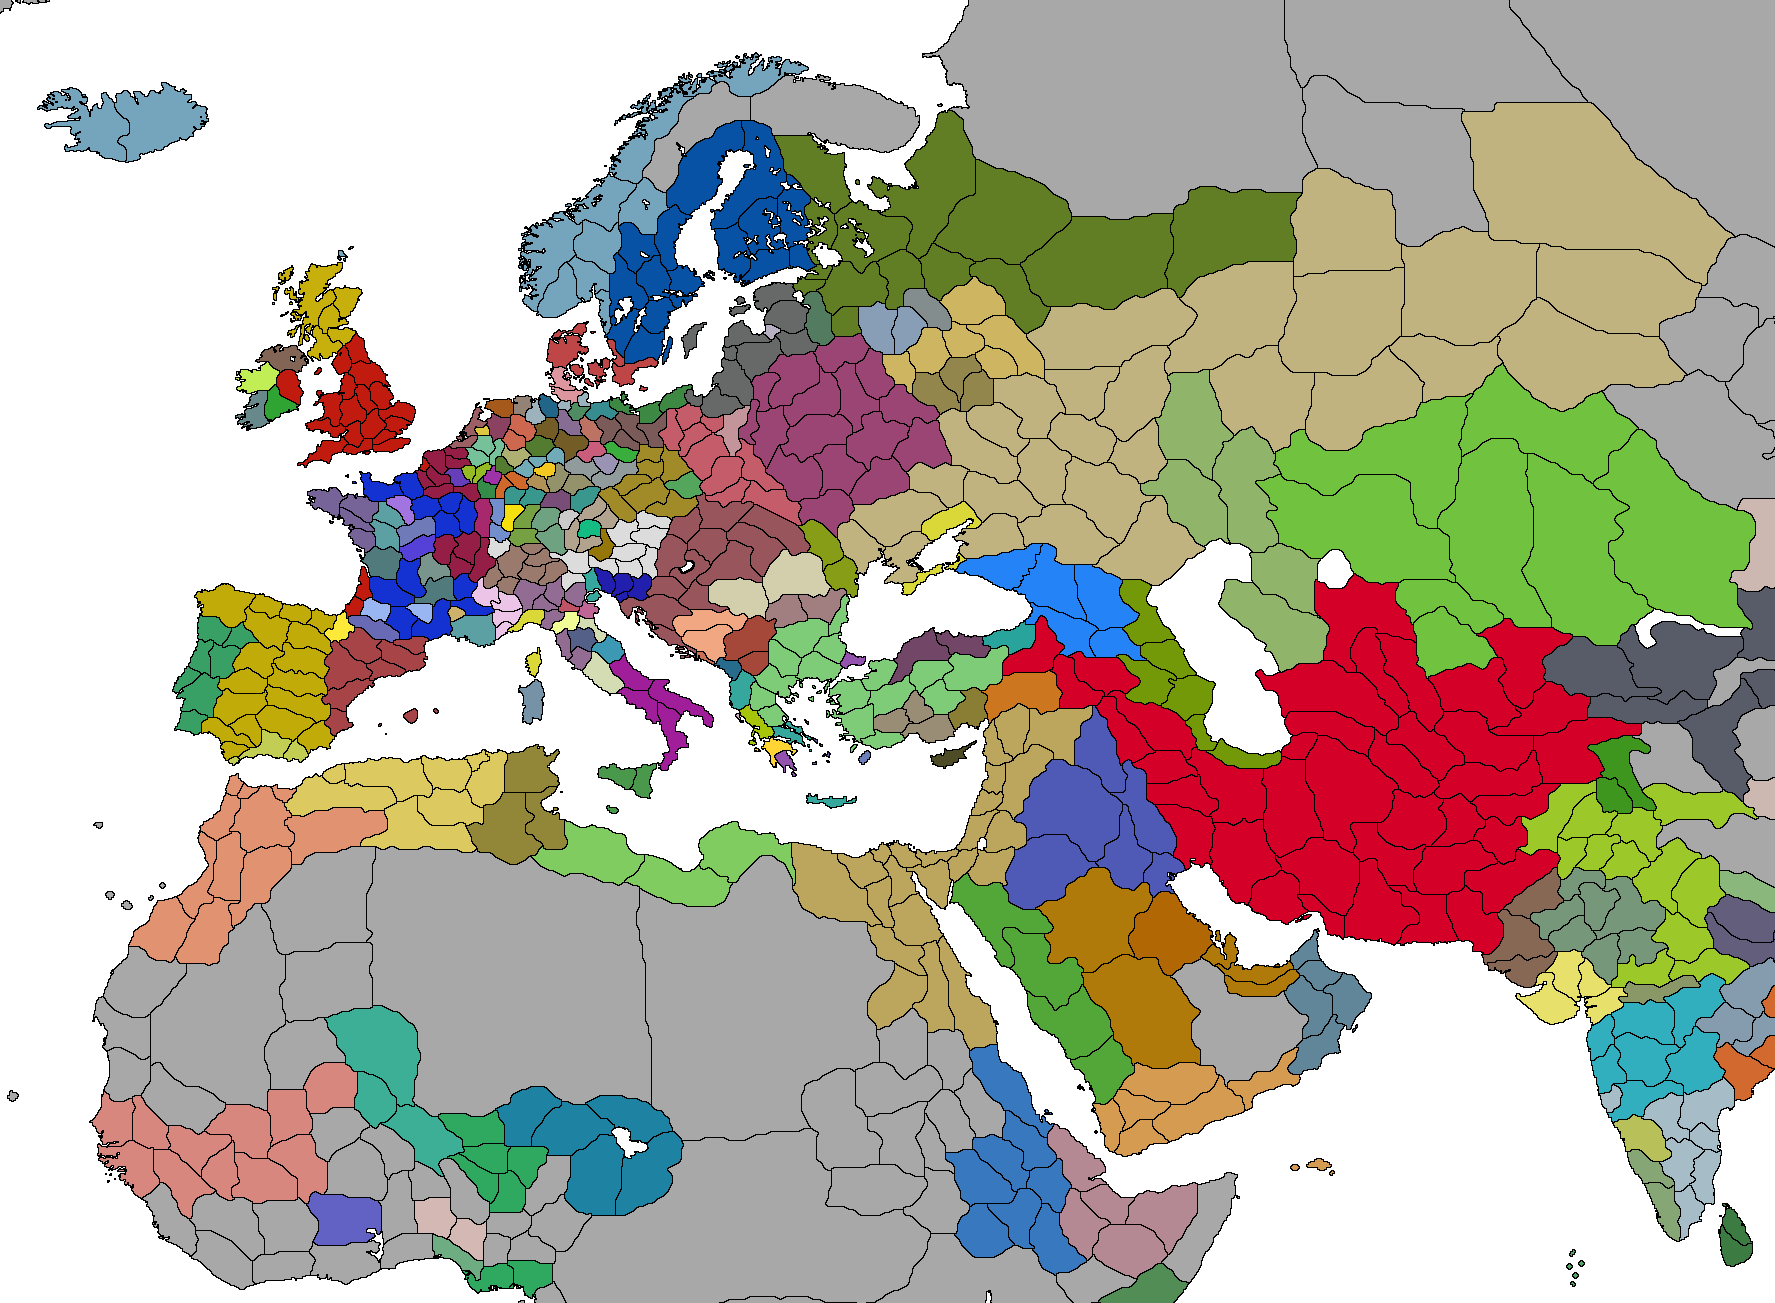 Maps for mapping. Карта Европы eu4. Карта провинций eu4. Карта Европы 1444 года. Карта 1444 года eu4.